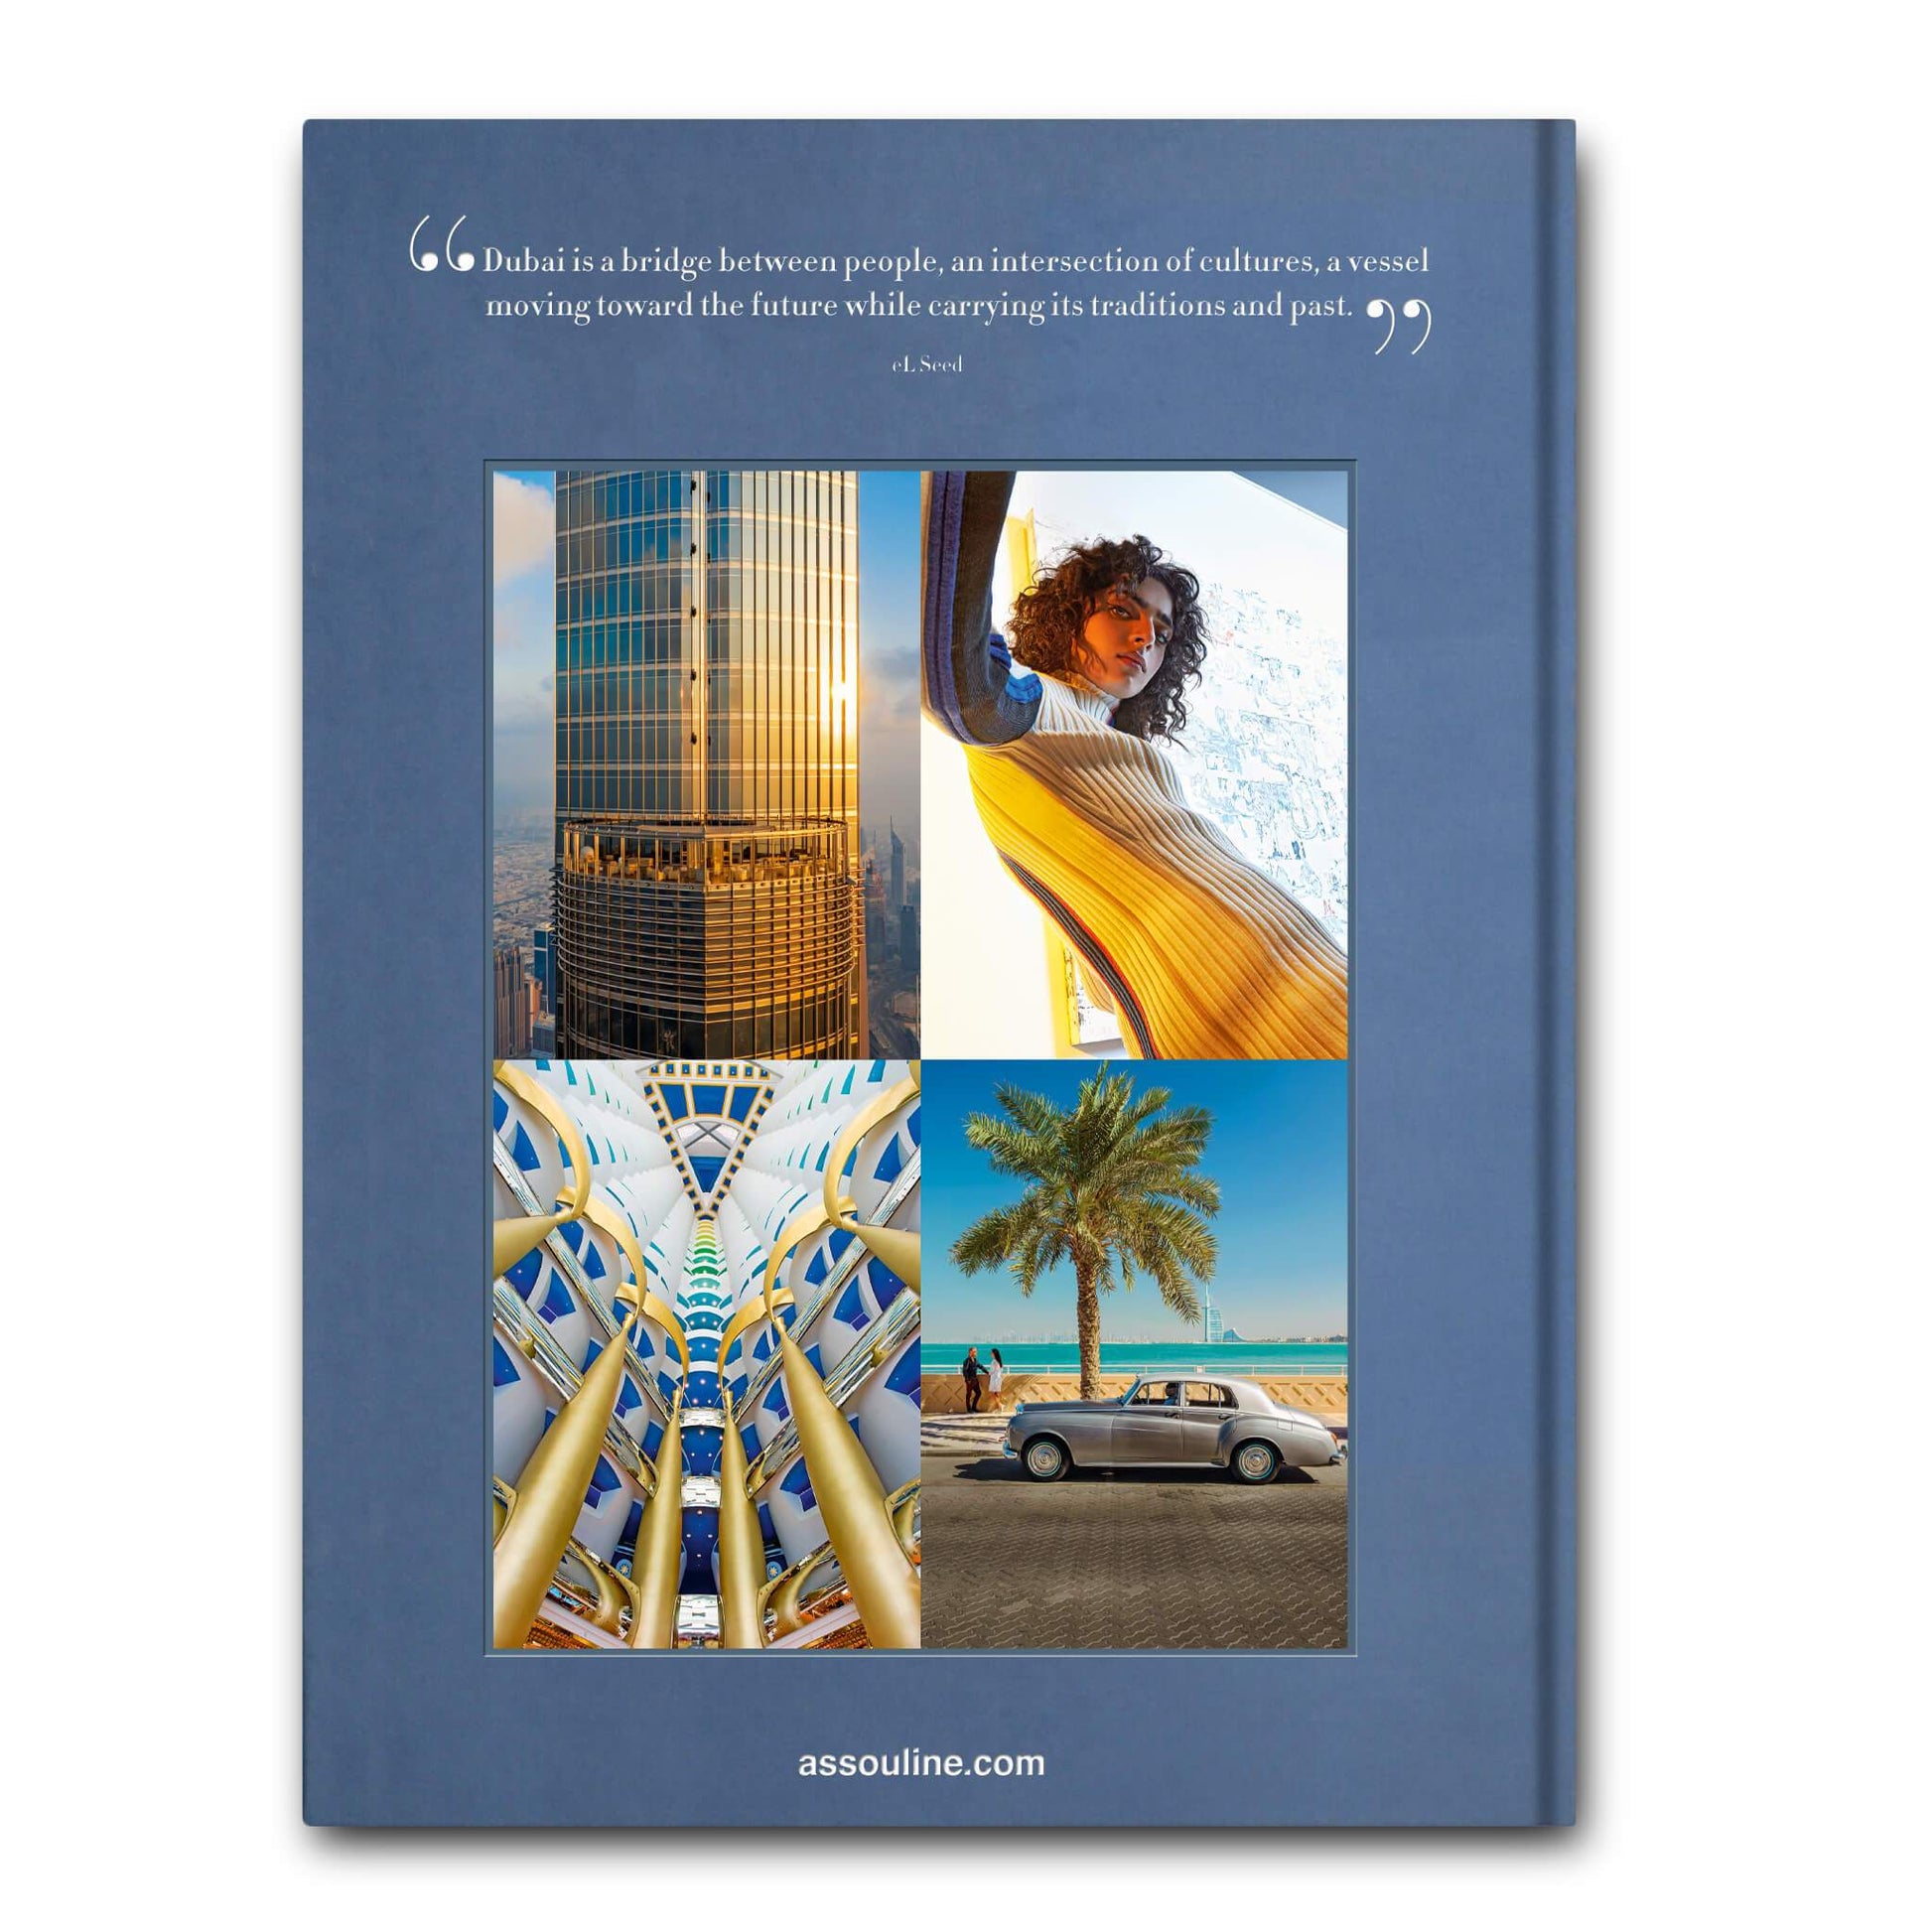 Assouline - Dubai Wonder Book